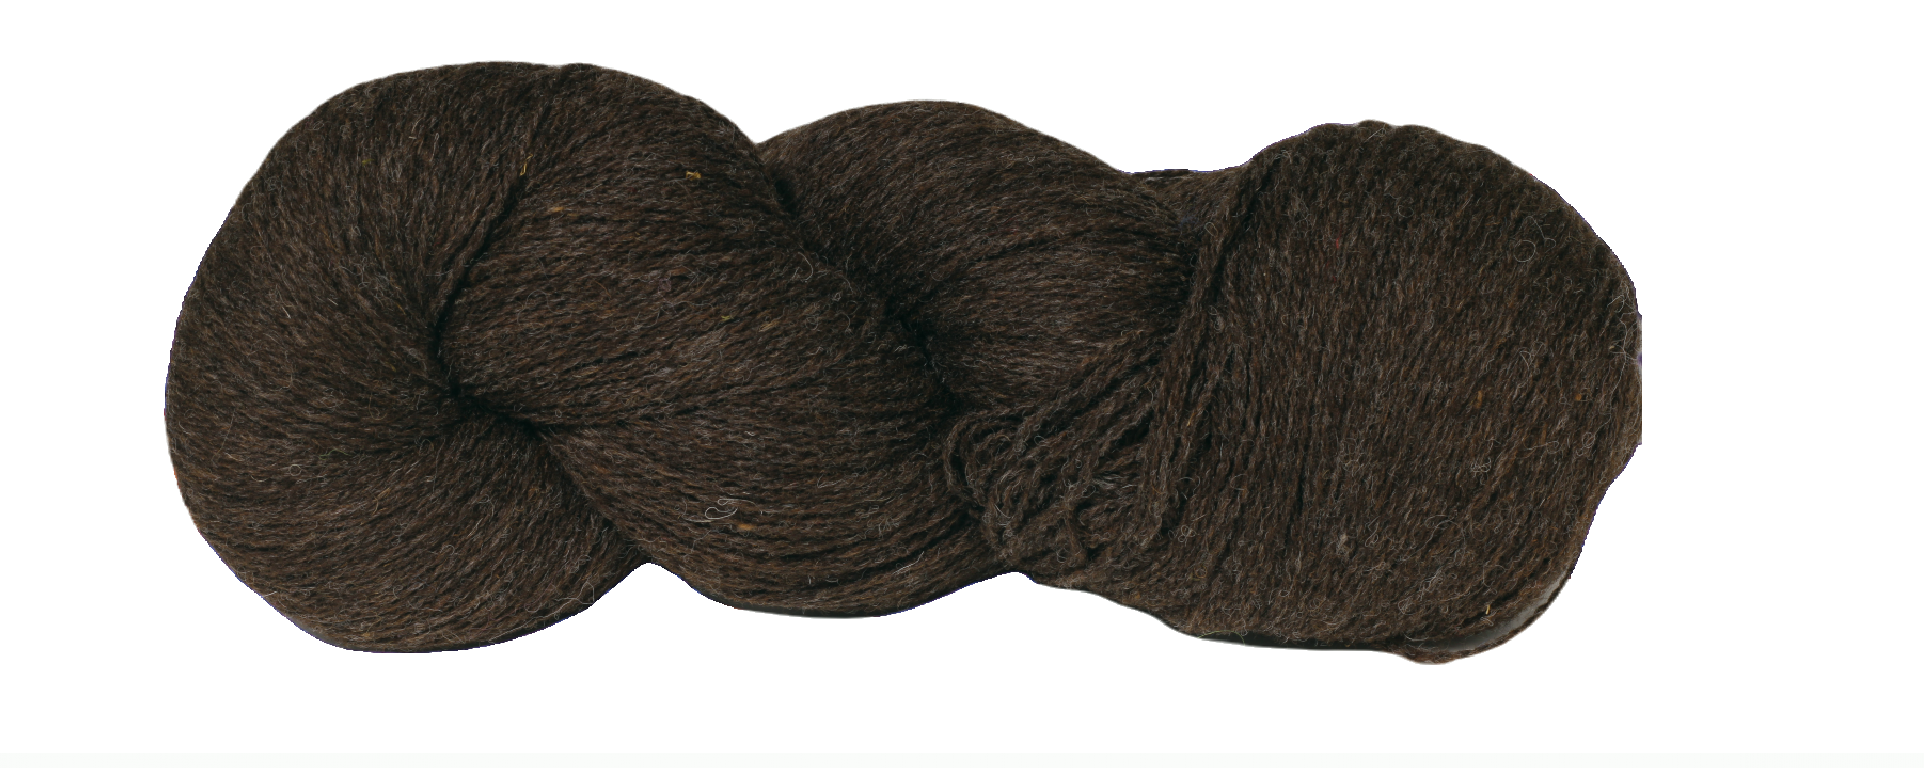 Estonian woolen yarn in natural tones, Wool and Woolen